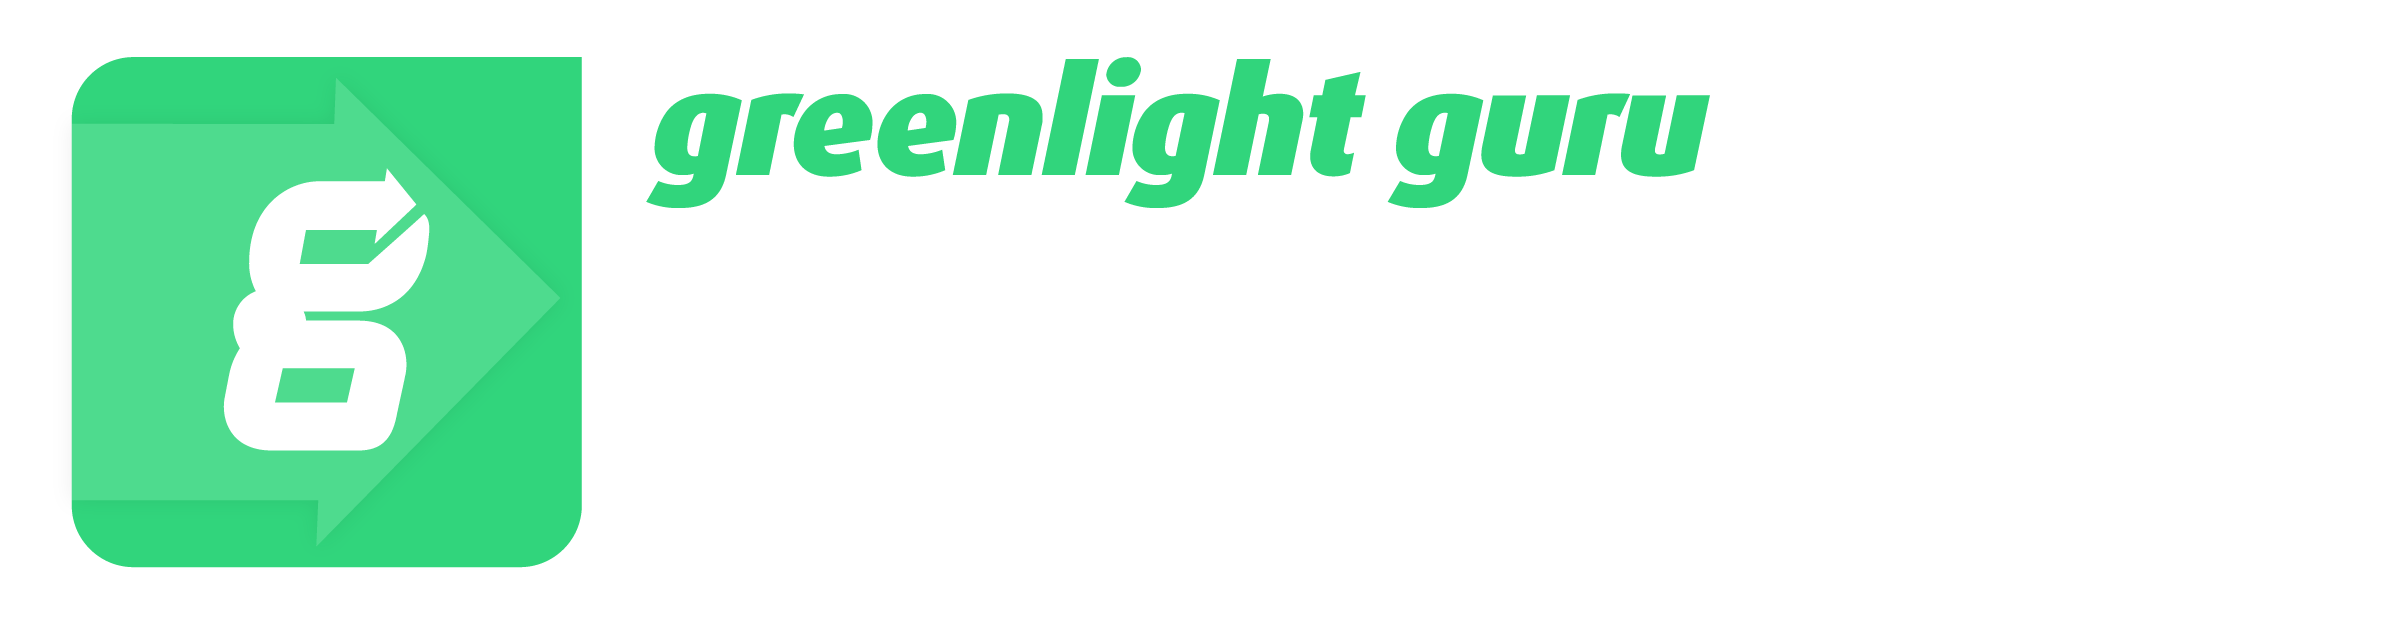 pricing page greenlight guru academy logo